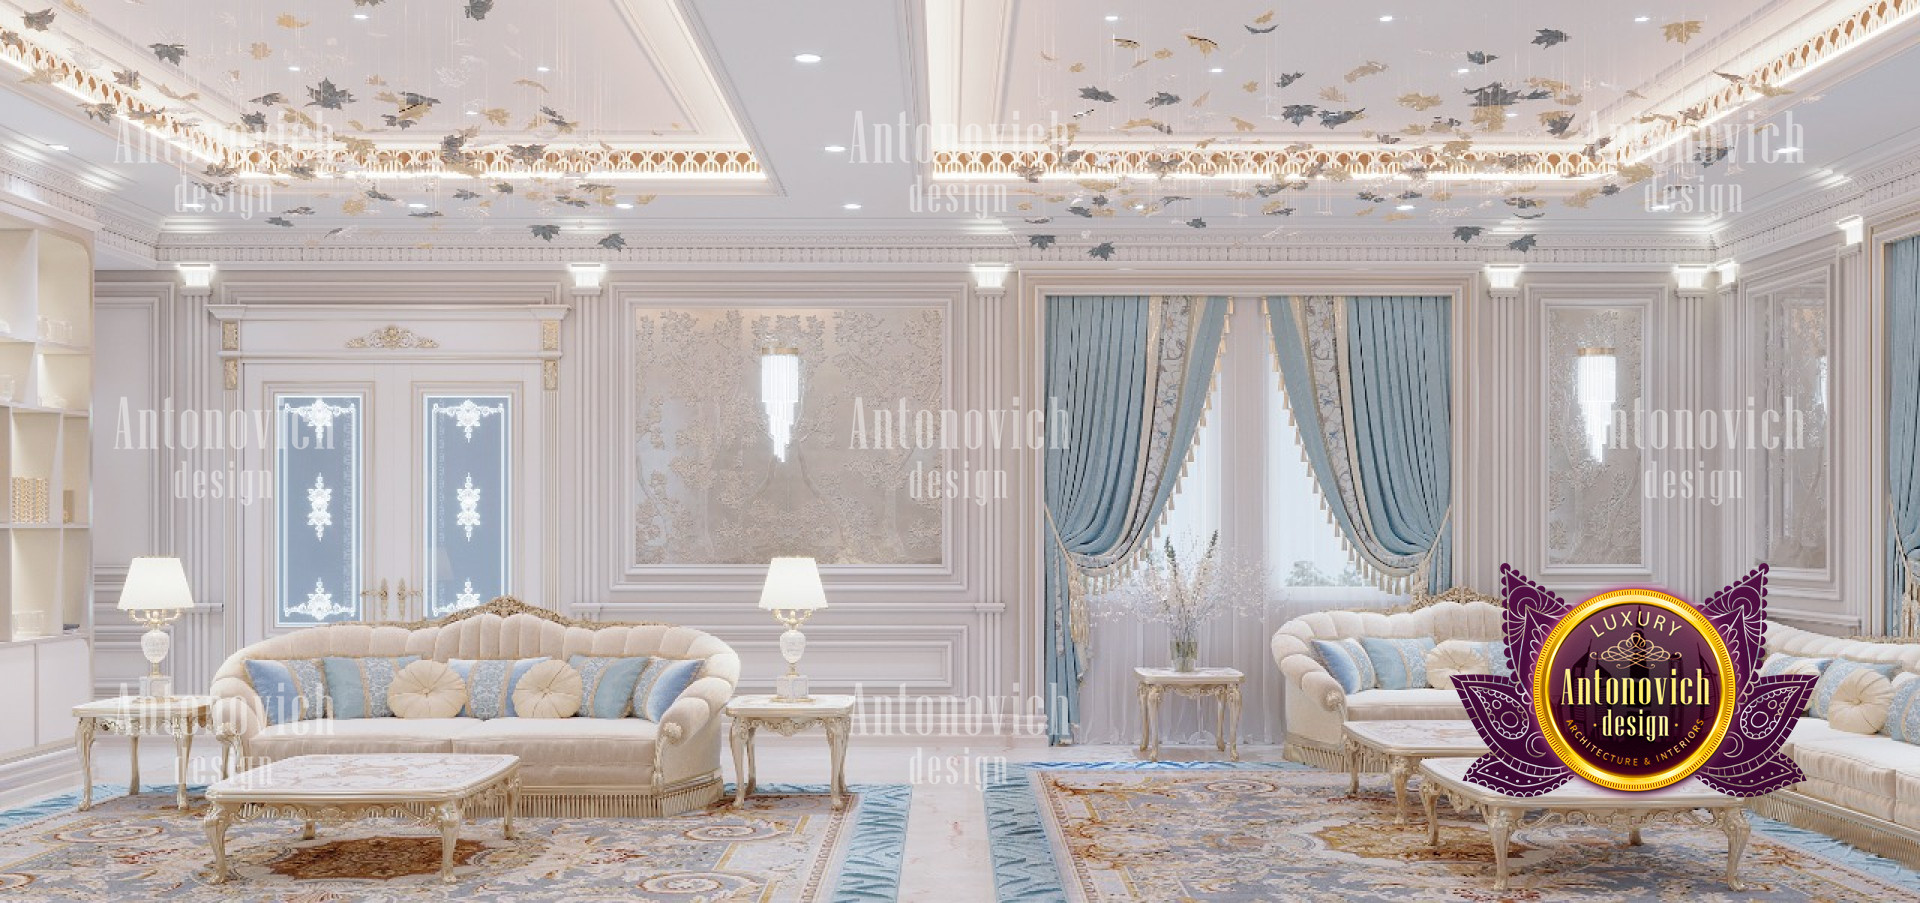 Luxury Antonovich Design Expert In